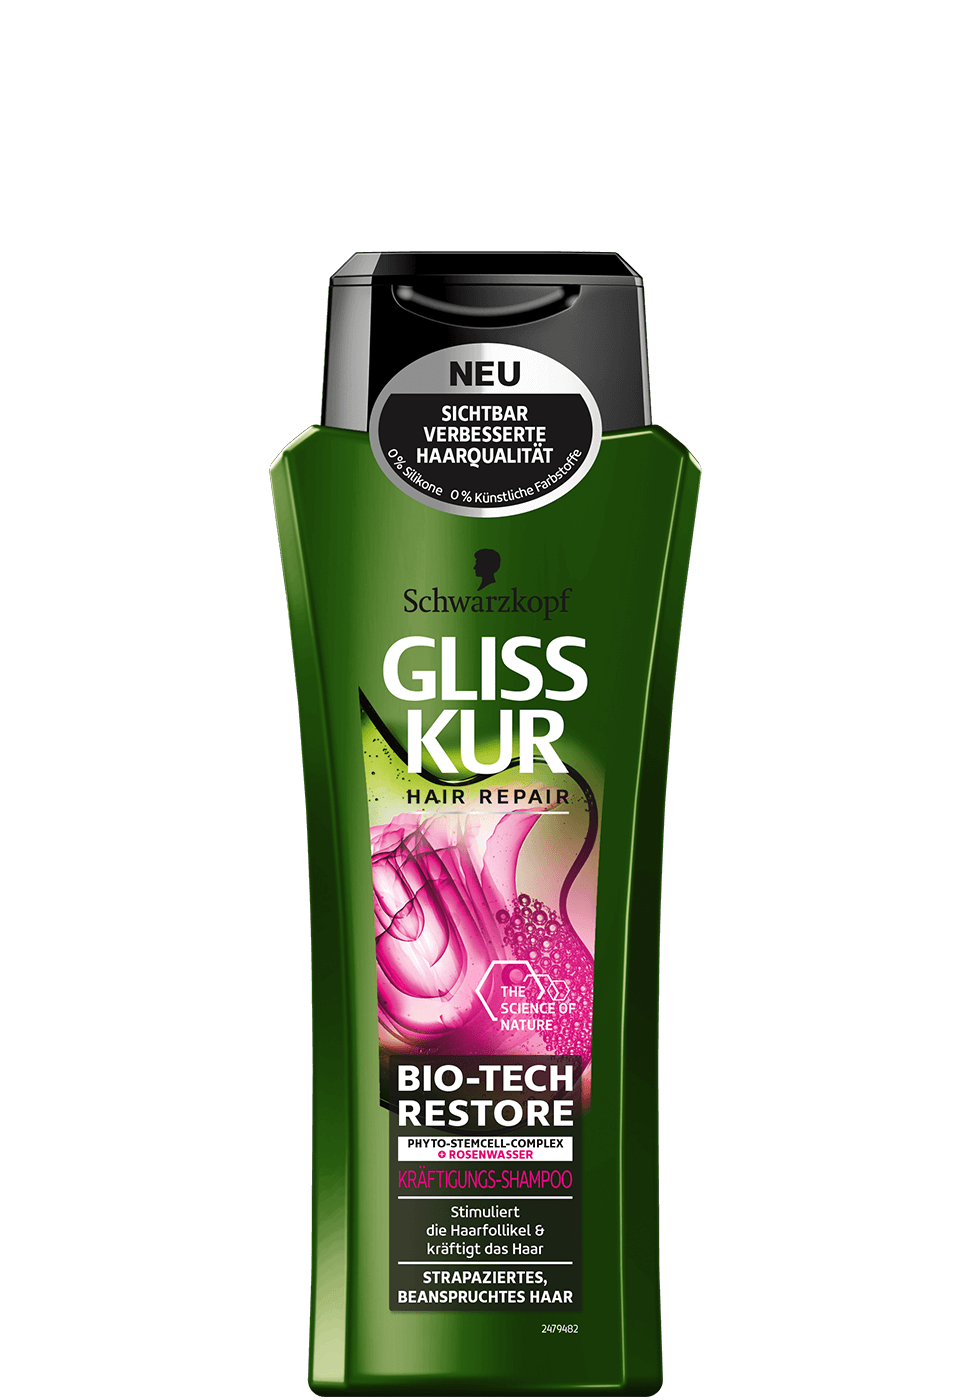 Schwarzkopf Gliss Kur Bio-tech Restore Shampoo